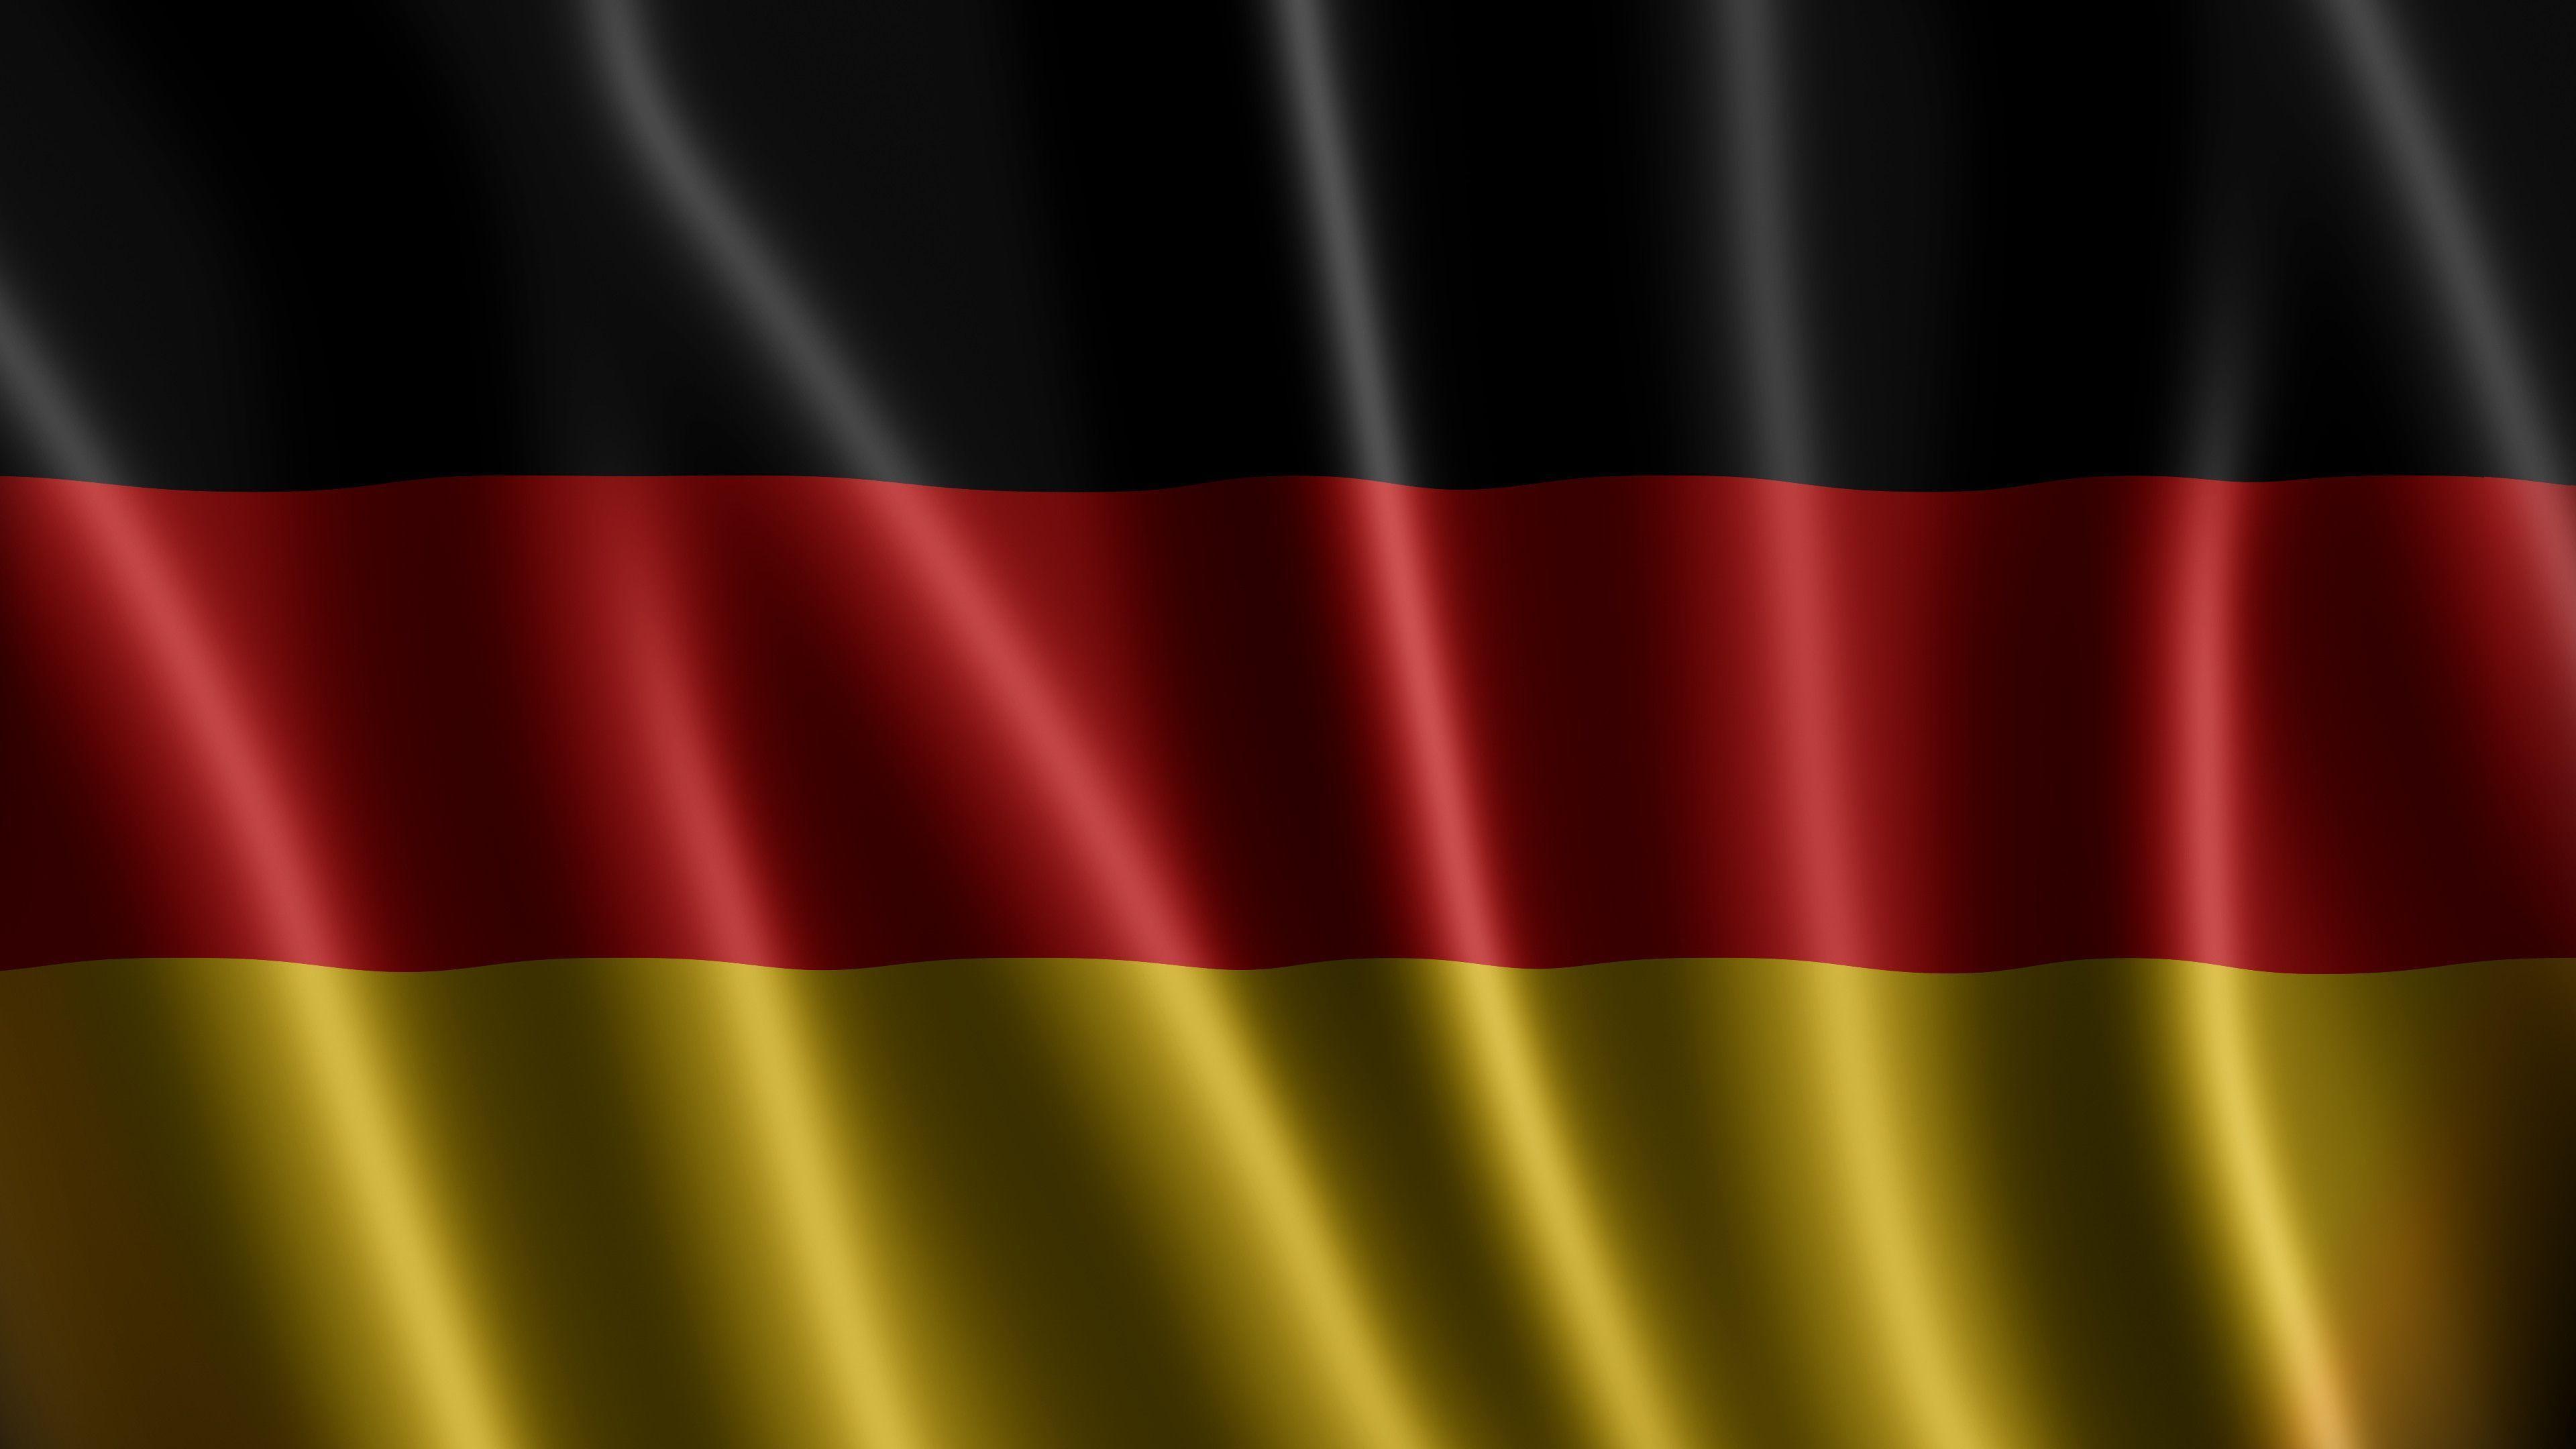 Desktop Wallpaper German Flag Eagle 1920 X 1200 487 Kb Jpeg